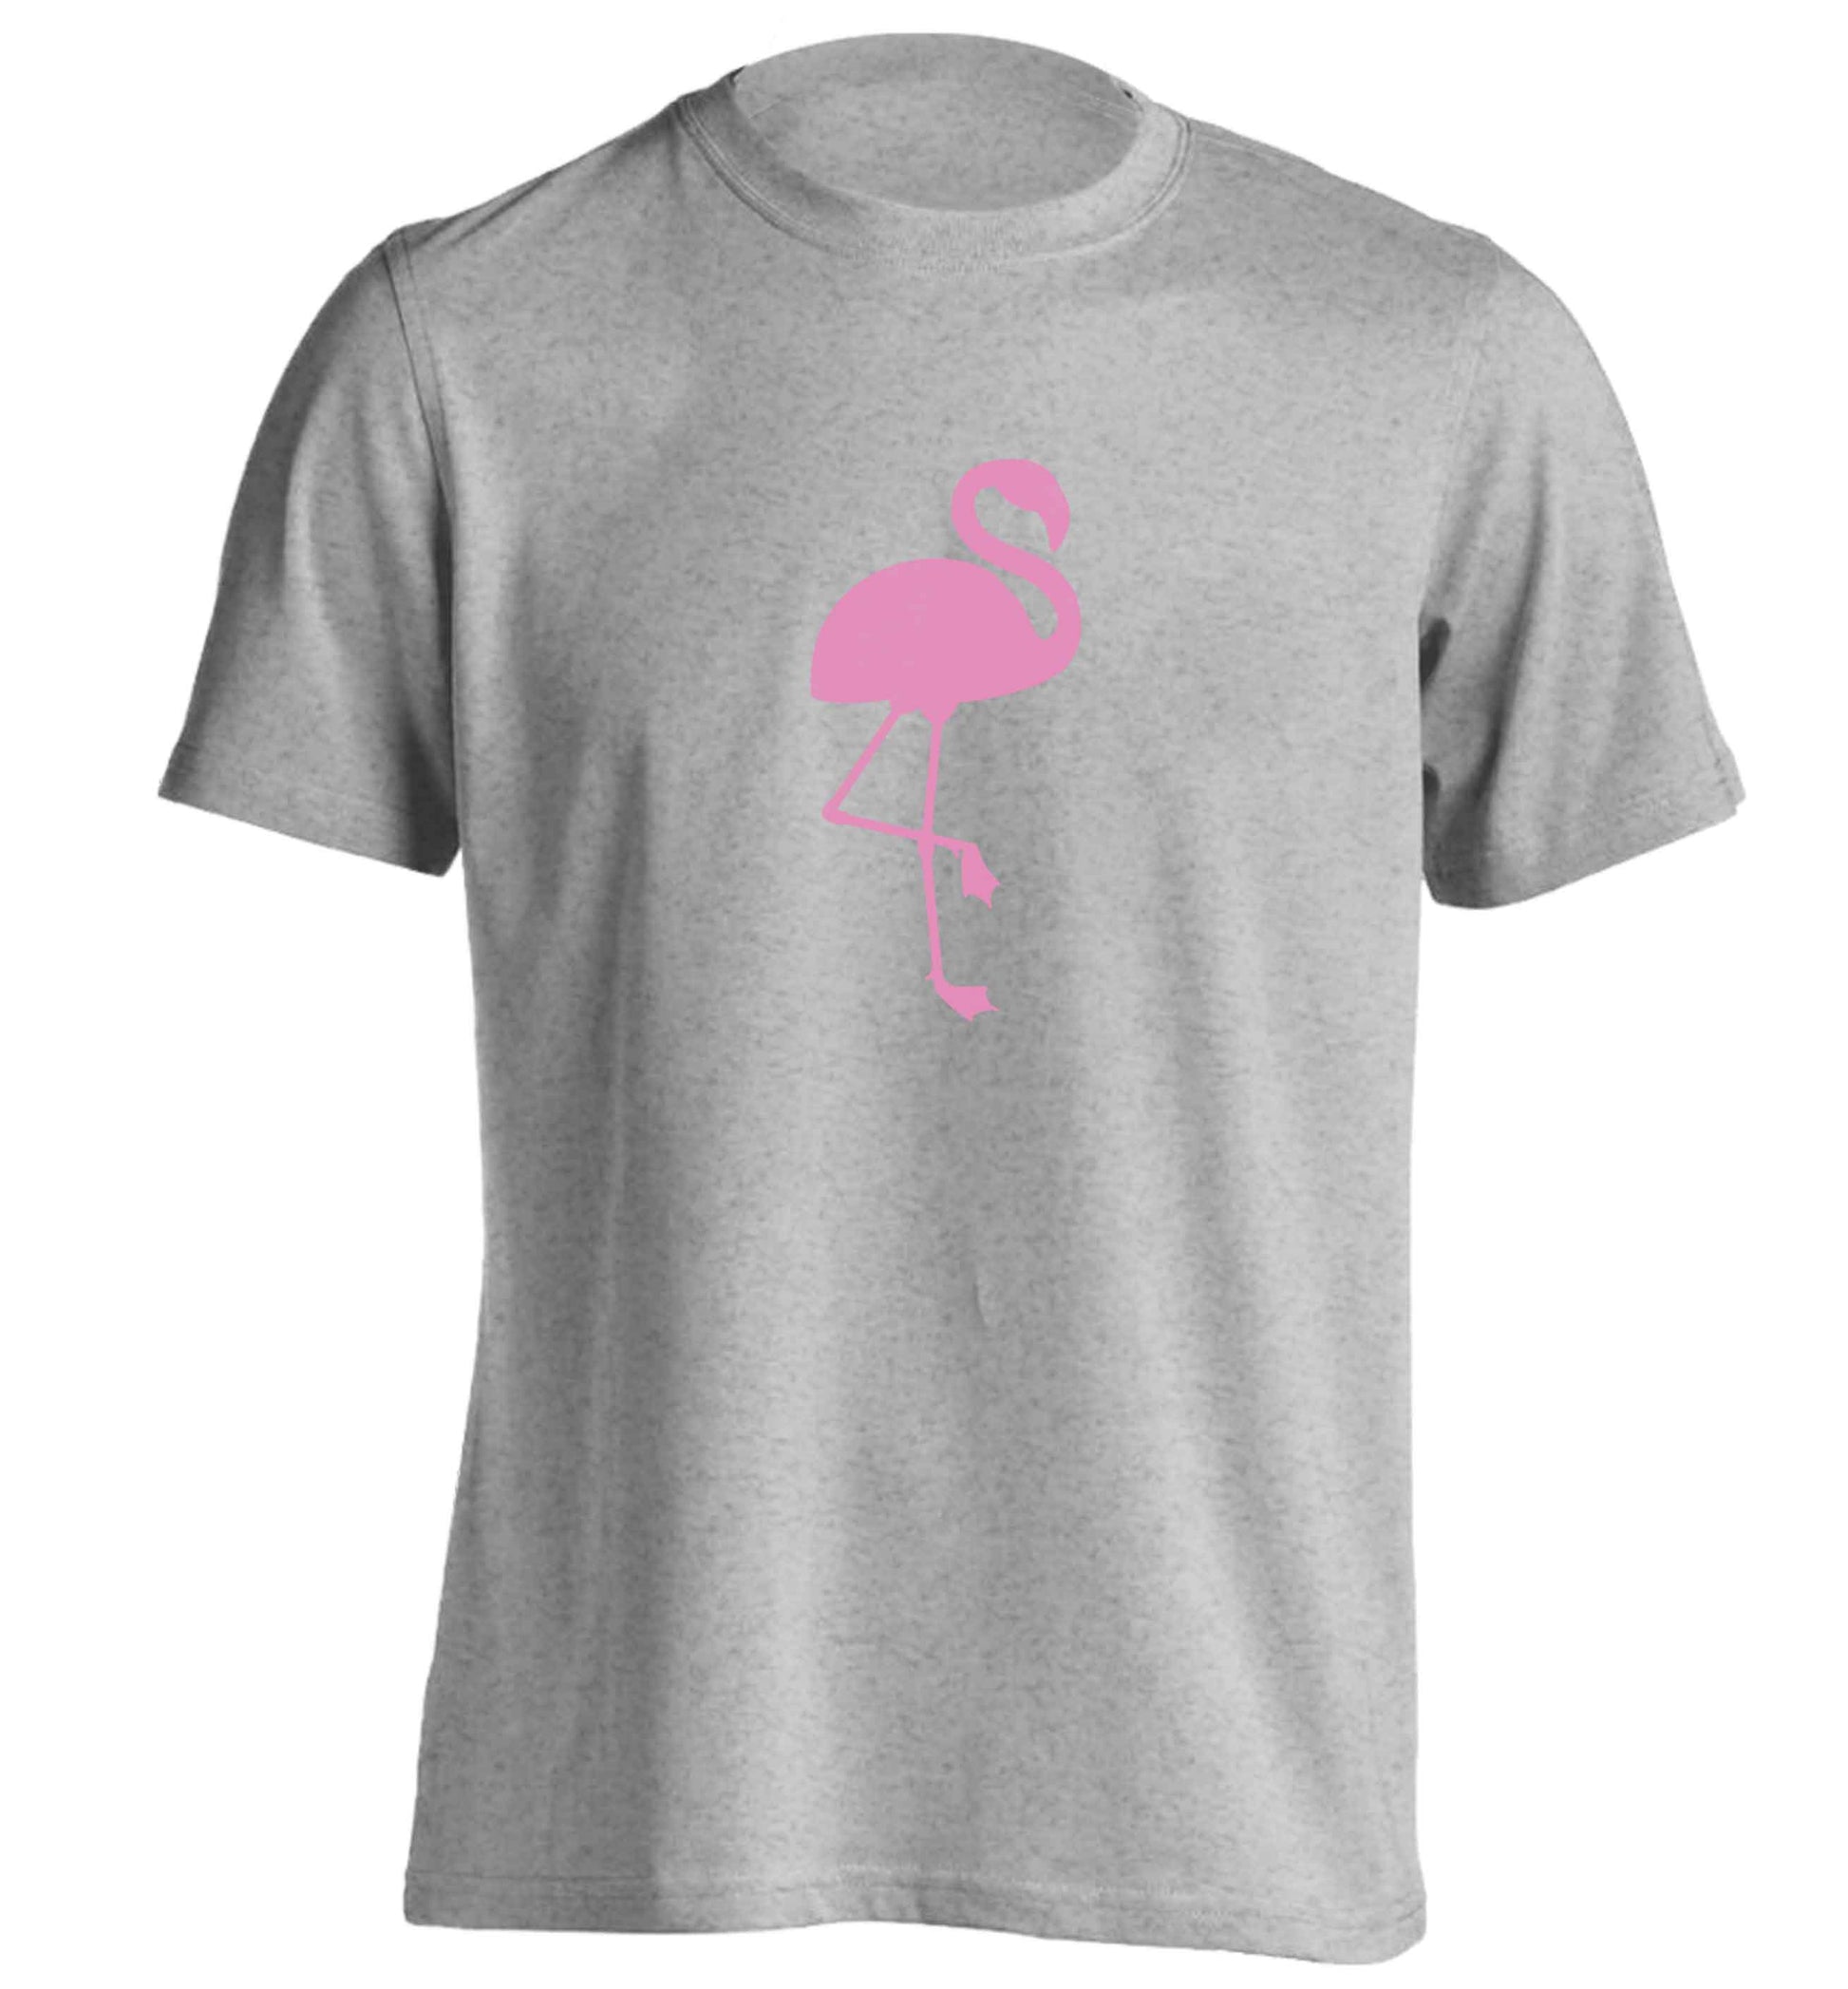 Pink flamingo adults unisex grey Tshirt 2XL